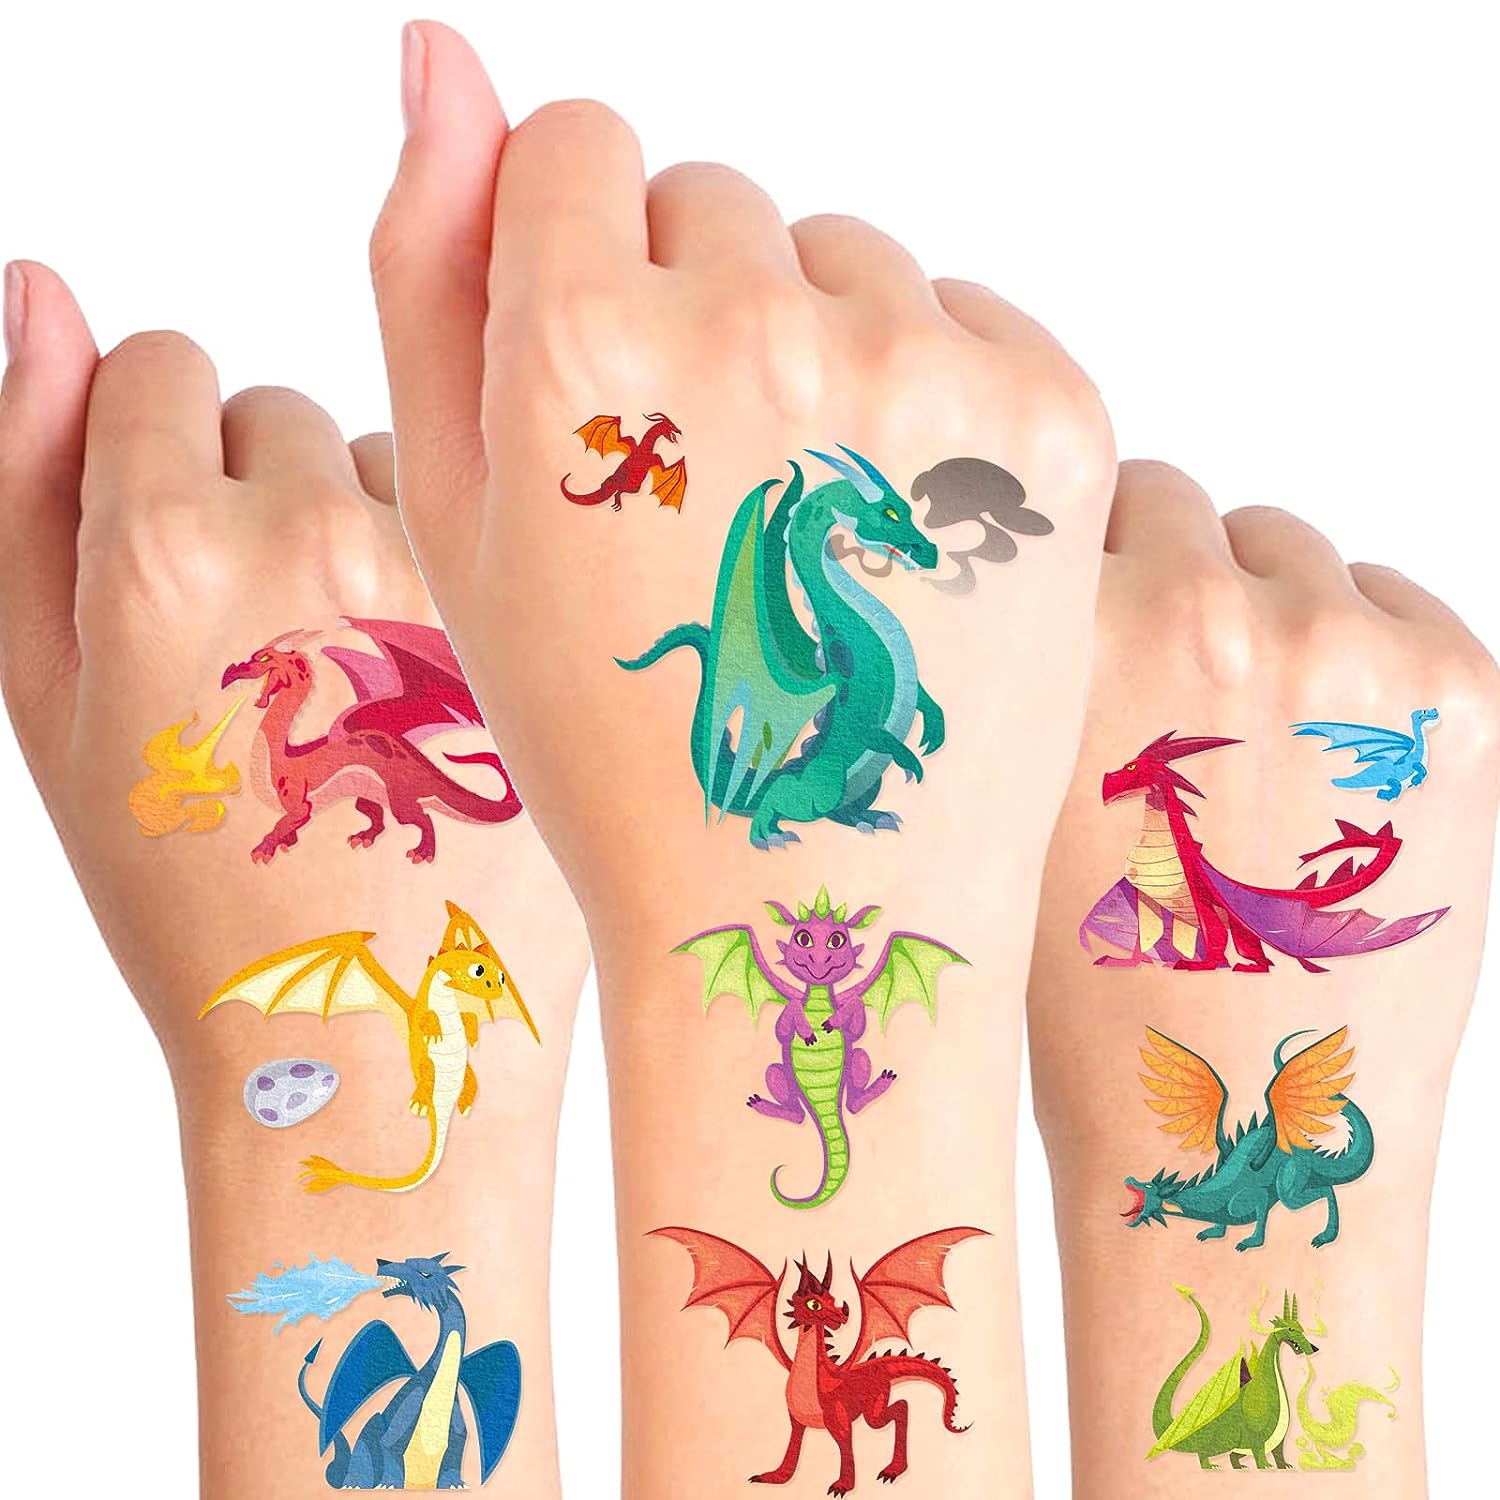 Plush Dinosaur Tails for Kids, Set of 3, Dragon and Dinosaur